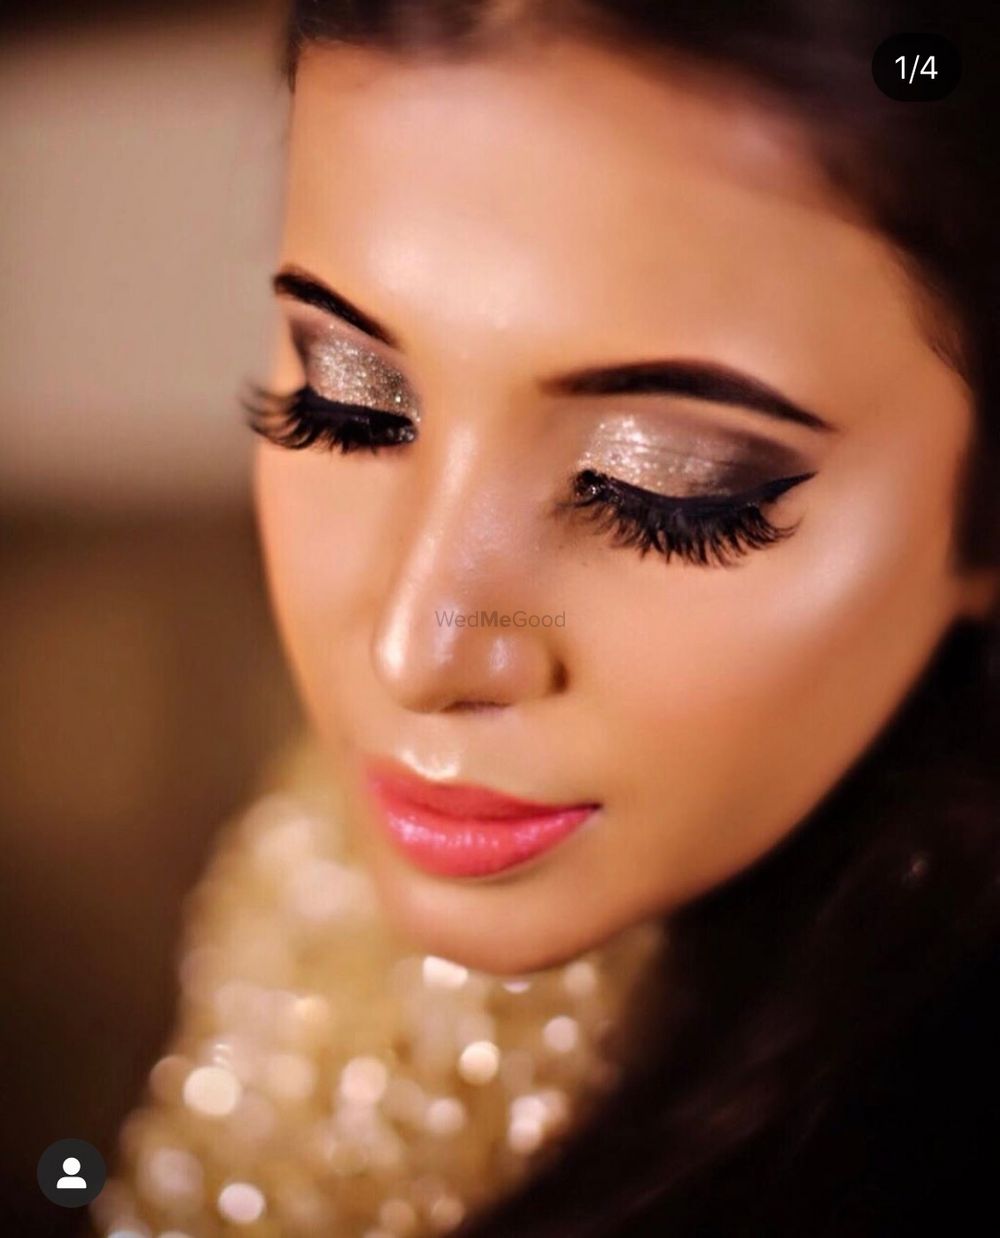 Photo By Kanika Jain Makeup Artistry - Bridal Makeup